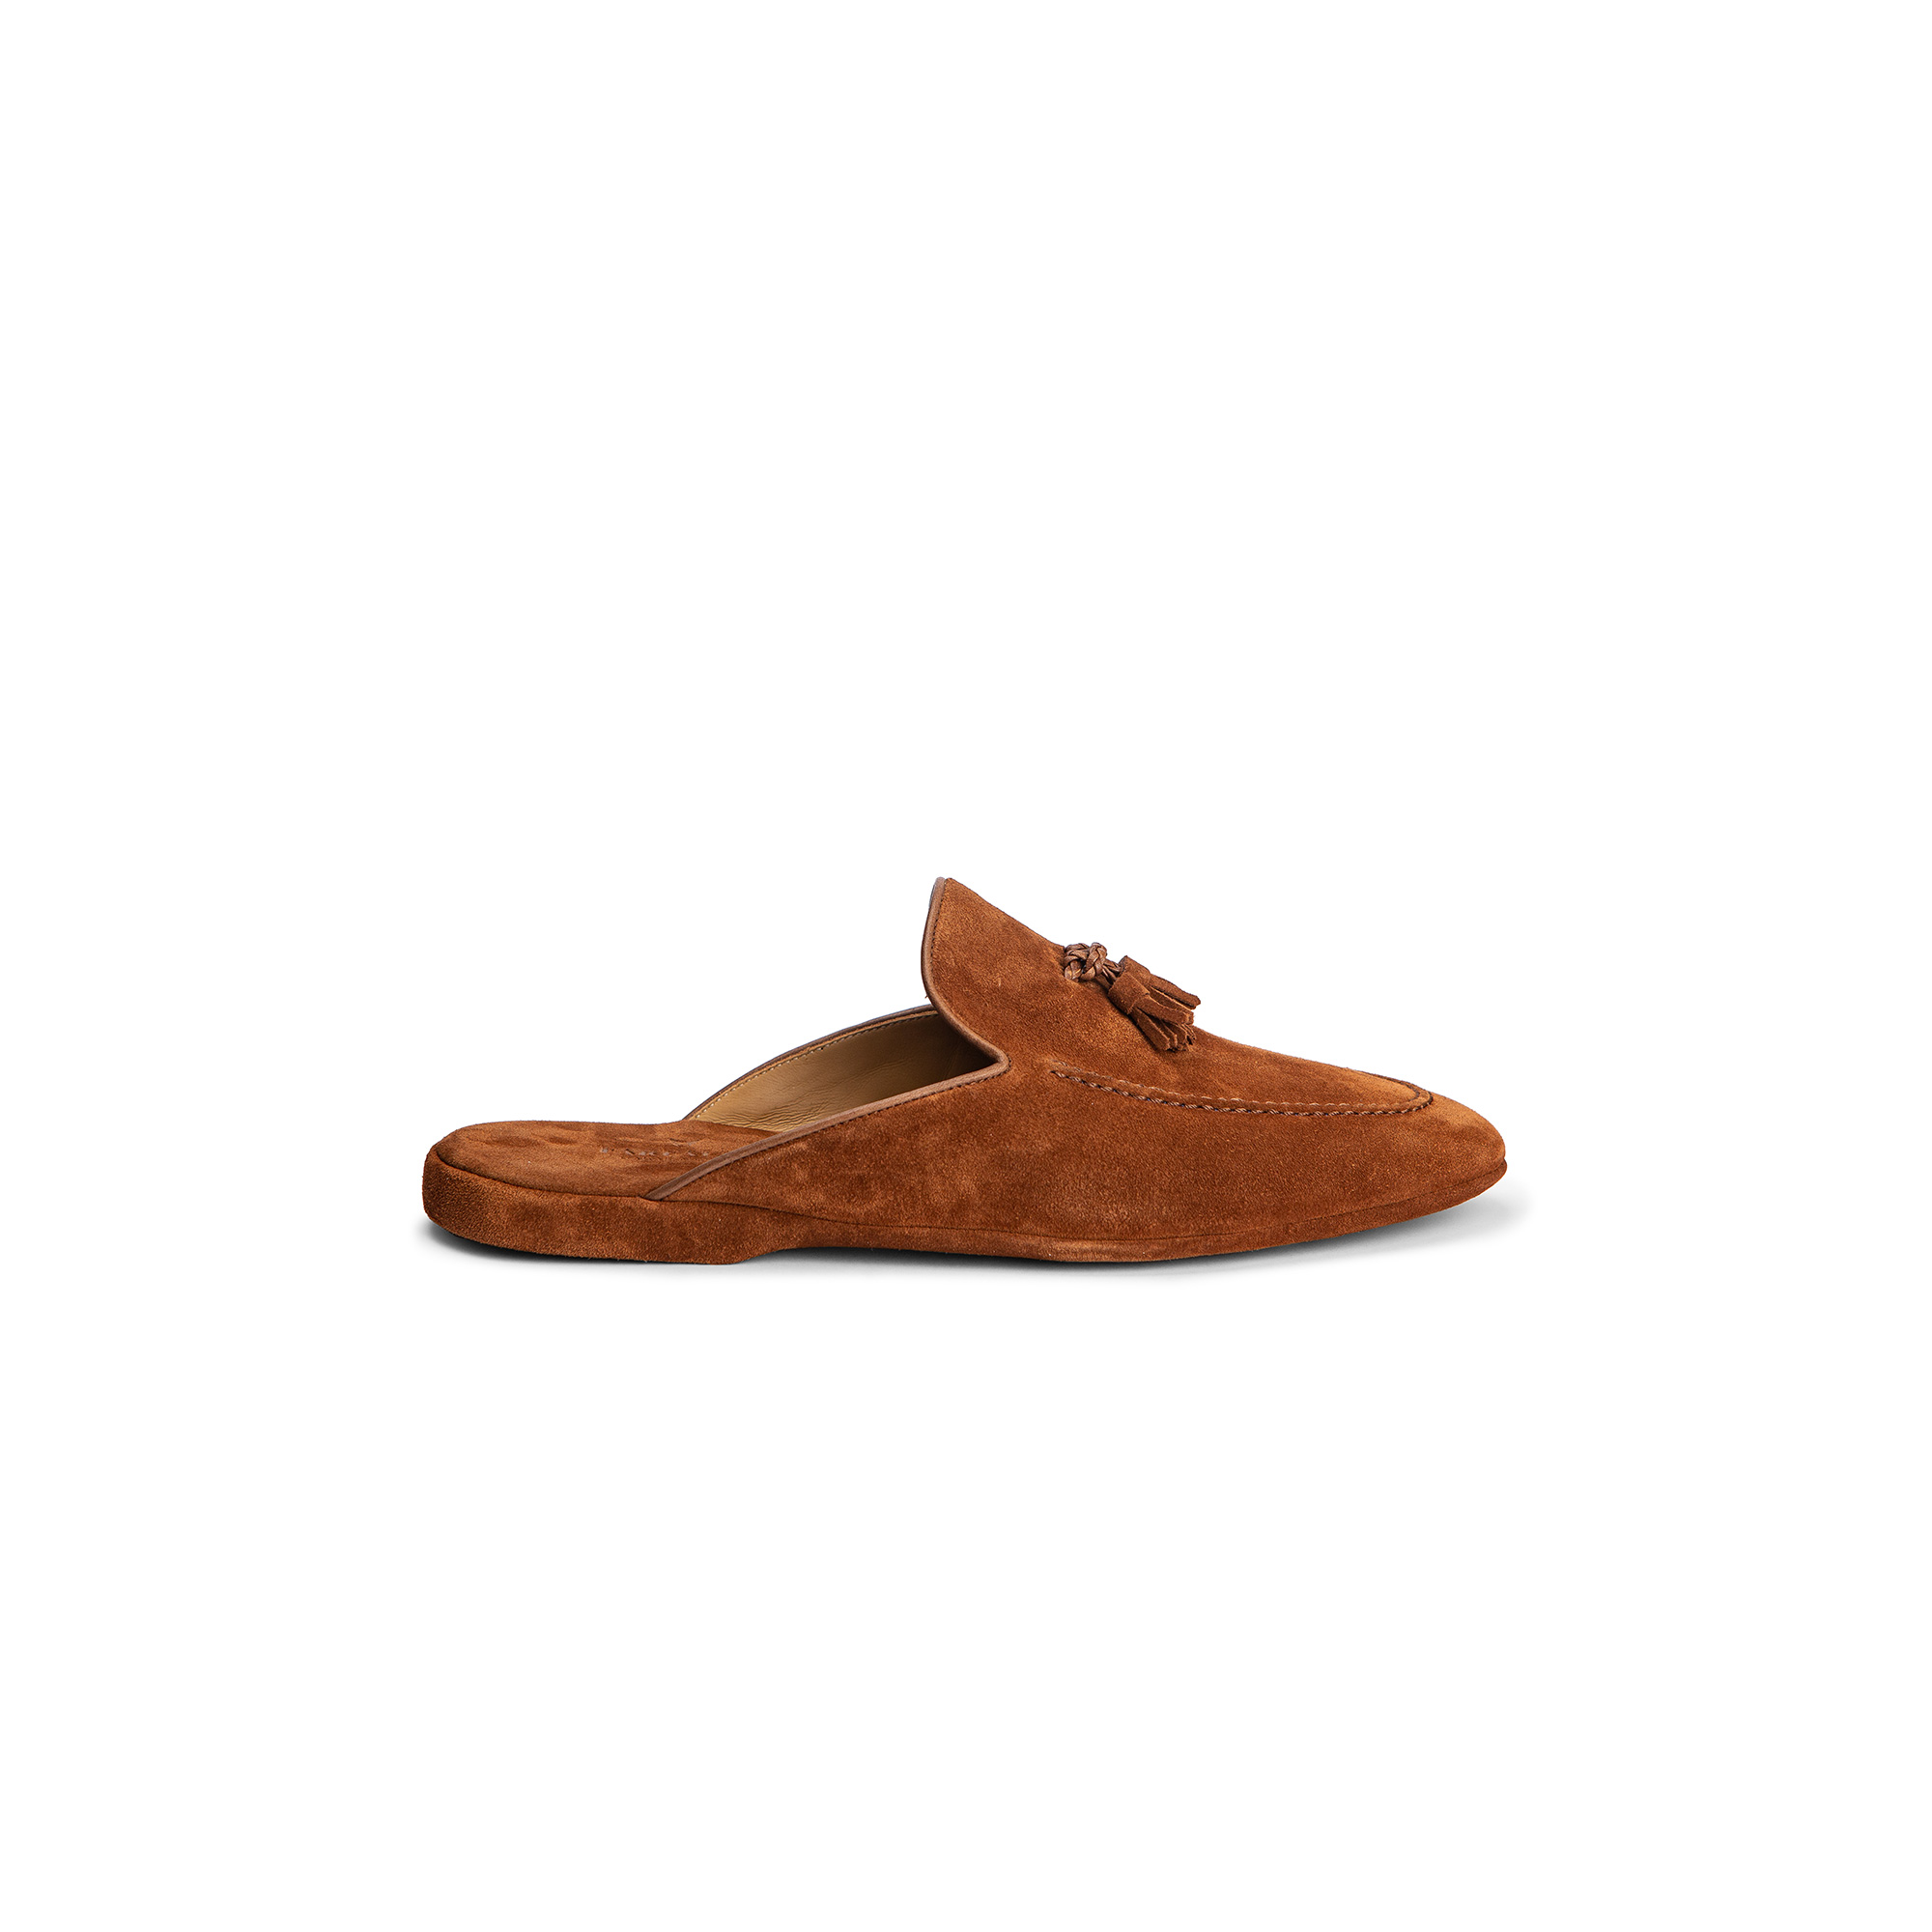 Pantofola aperta interno velour niger - Farfalla italian slippers